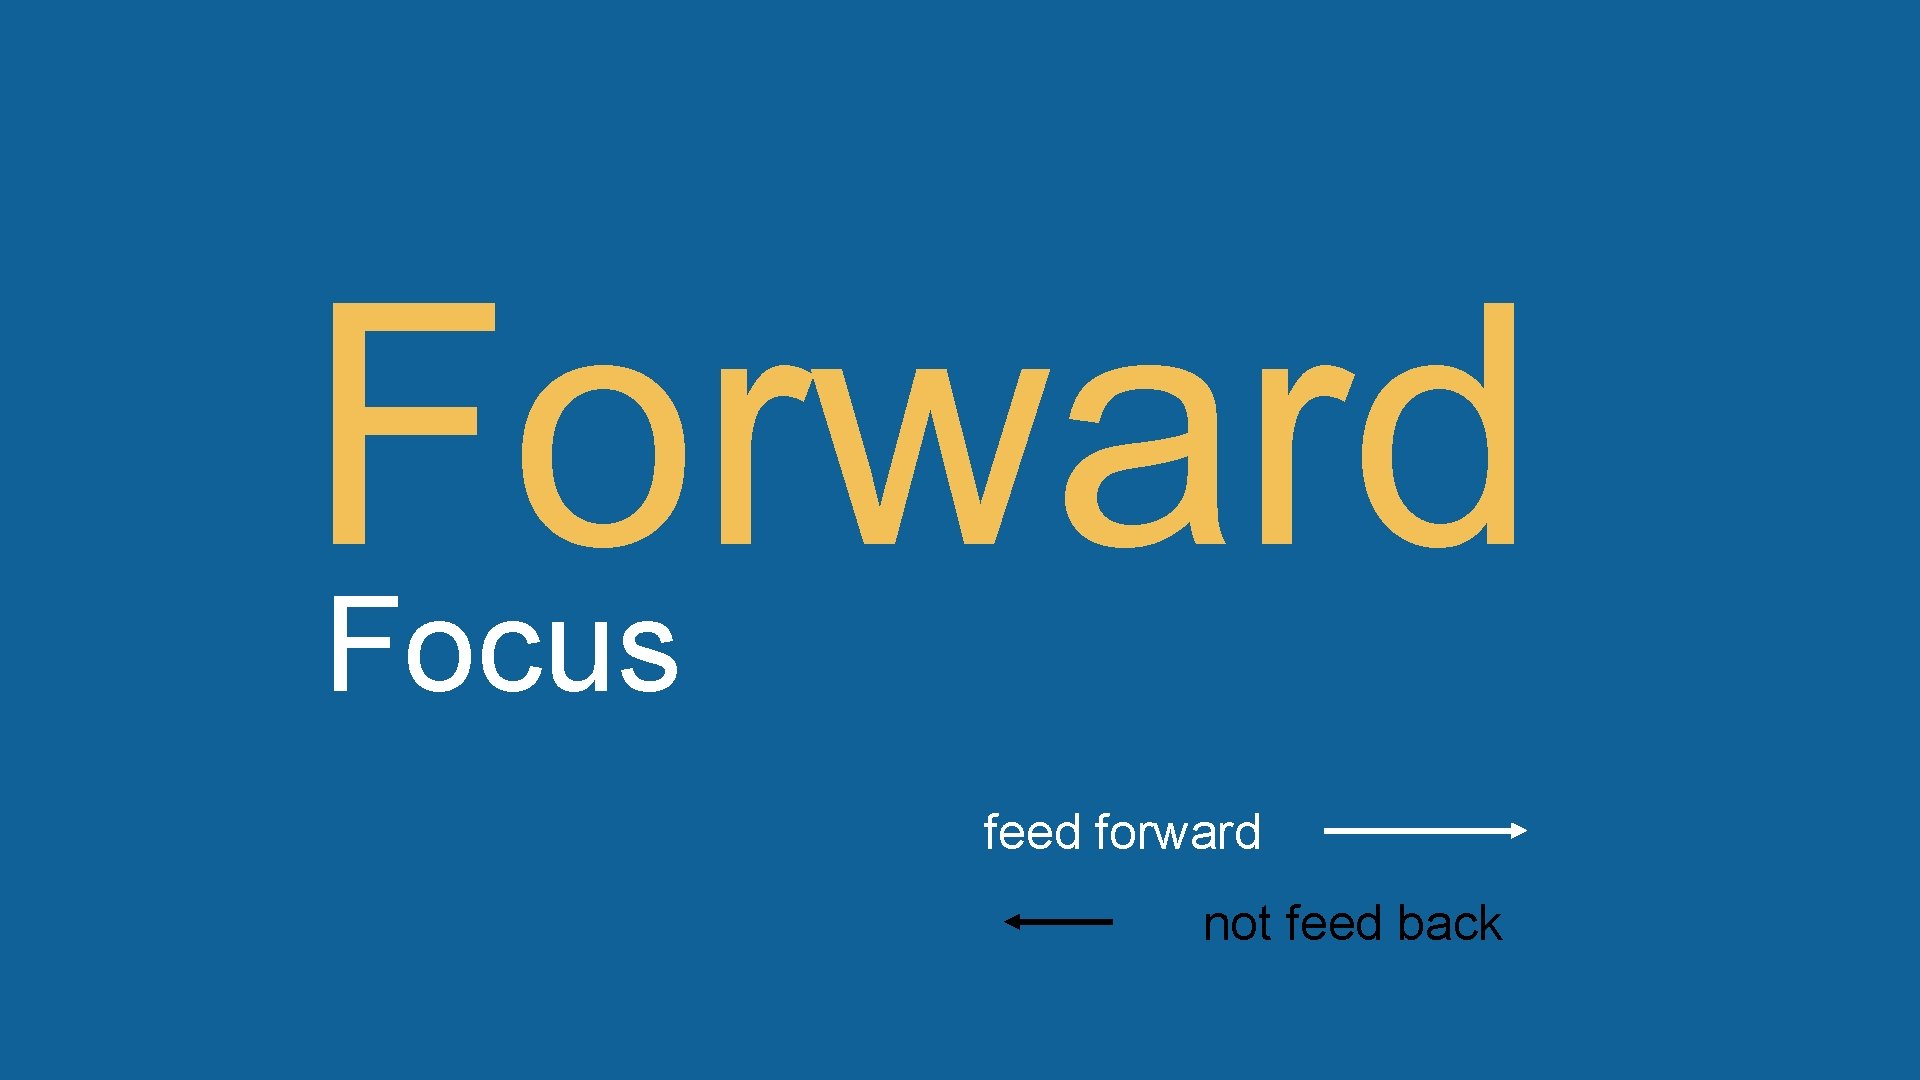 Forward Focus feed forward not feed back 